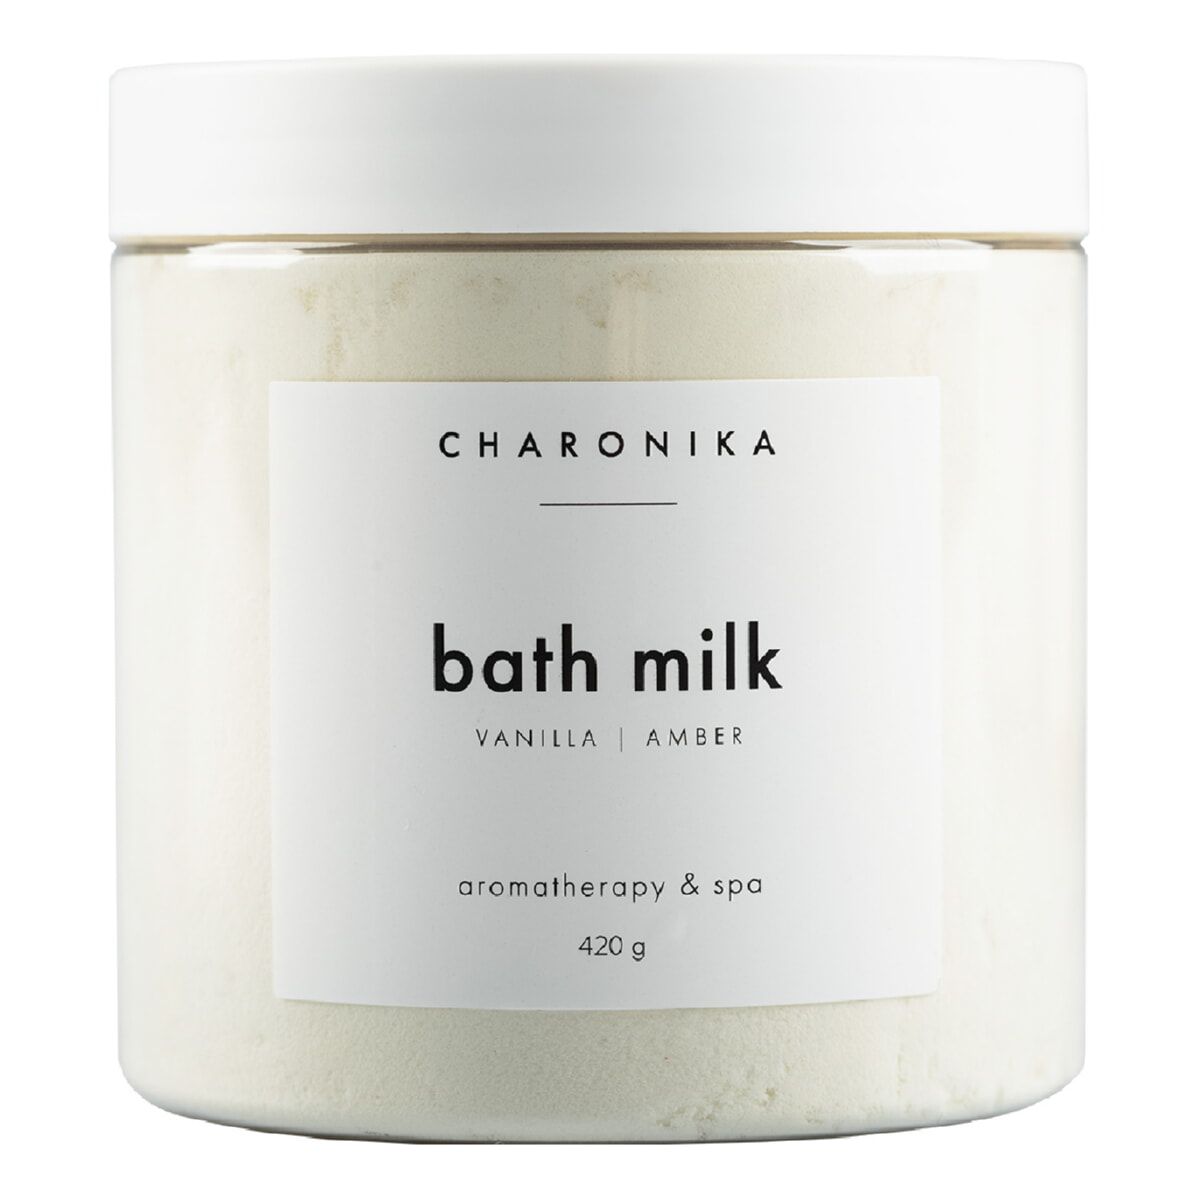 Молоко для ванн CHARONIKA Ваниль-янтарь увлажняющее, 420 г молоко для ванн charonika ваниль янтарь 420 г